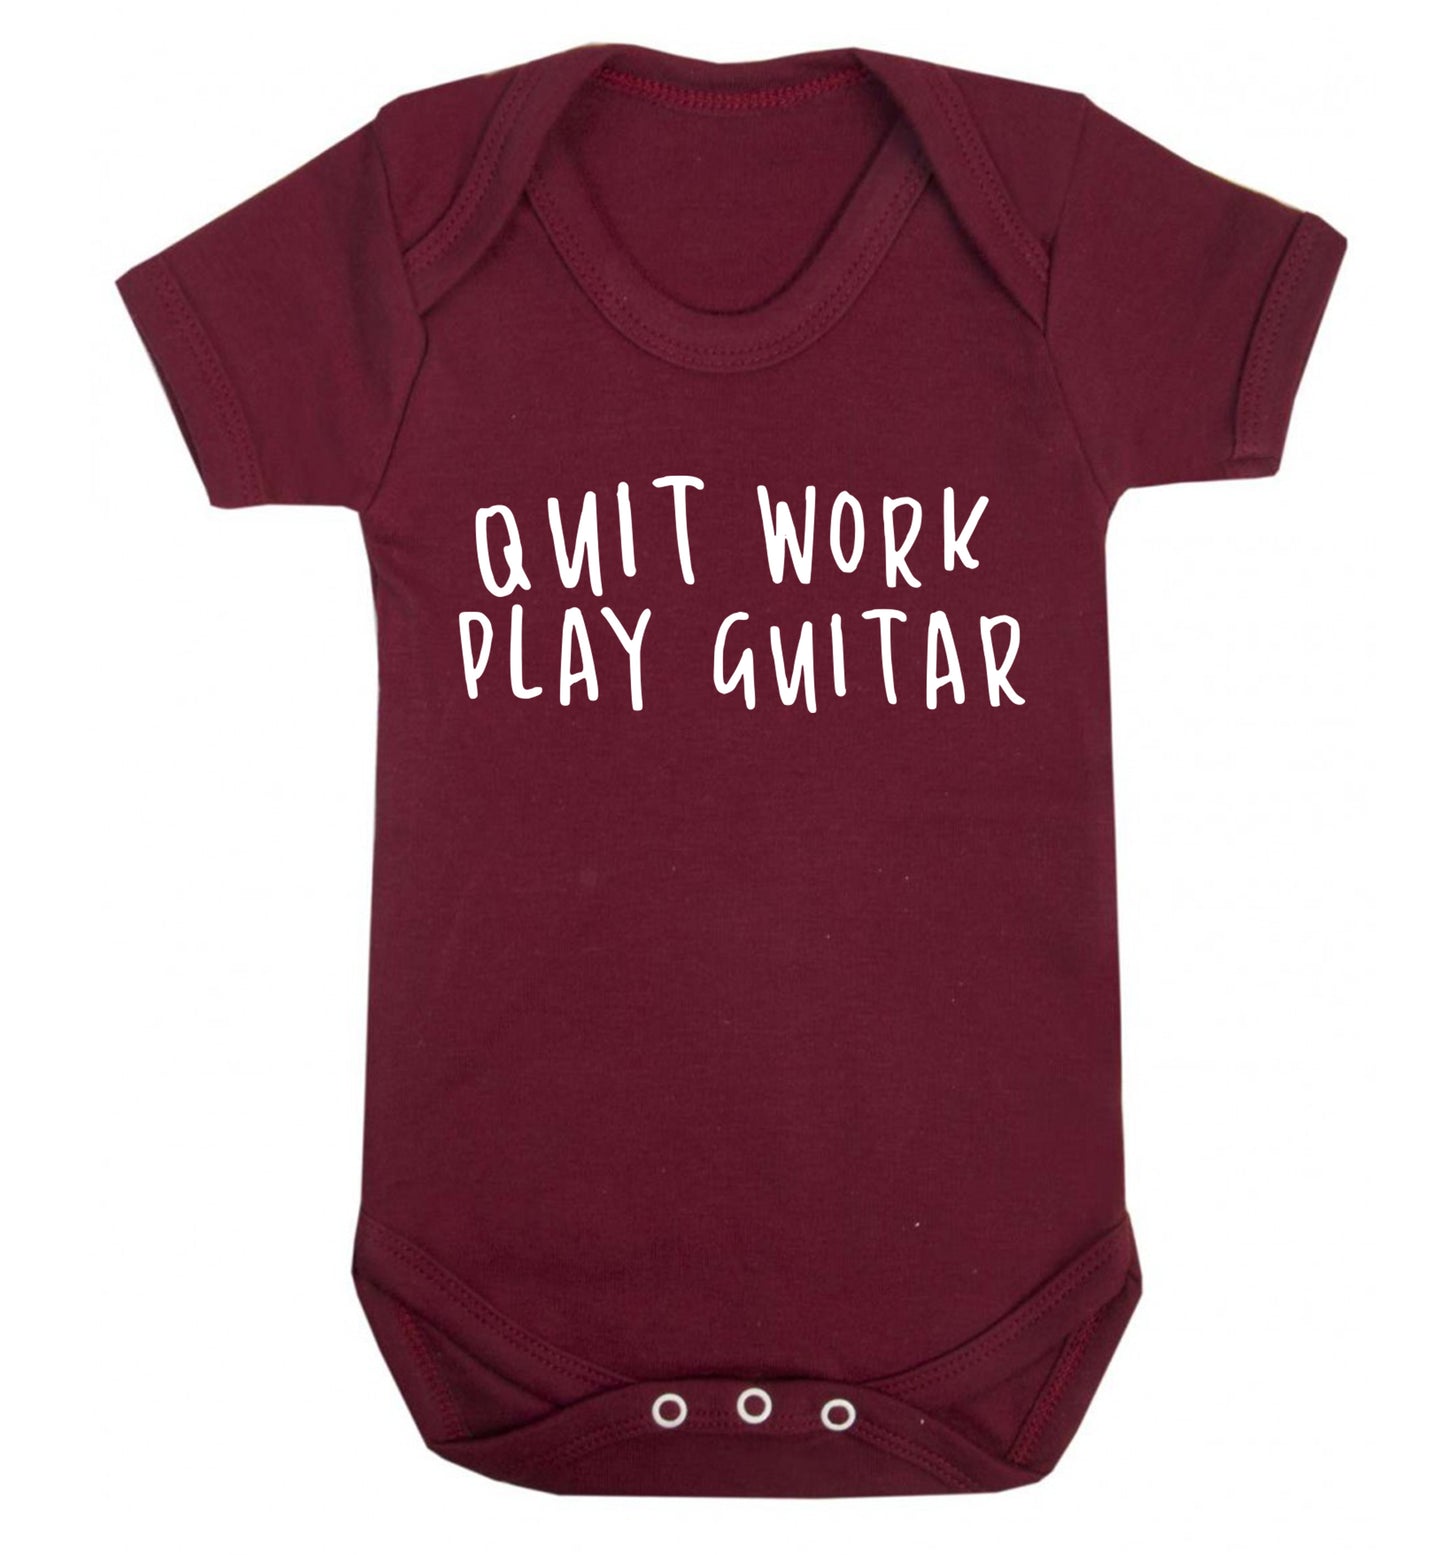 Quit work play guitar Baby Vest maroon 18-24 months